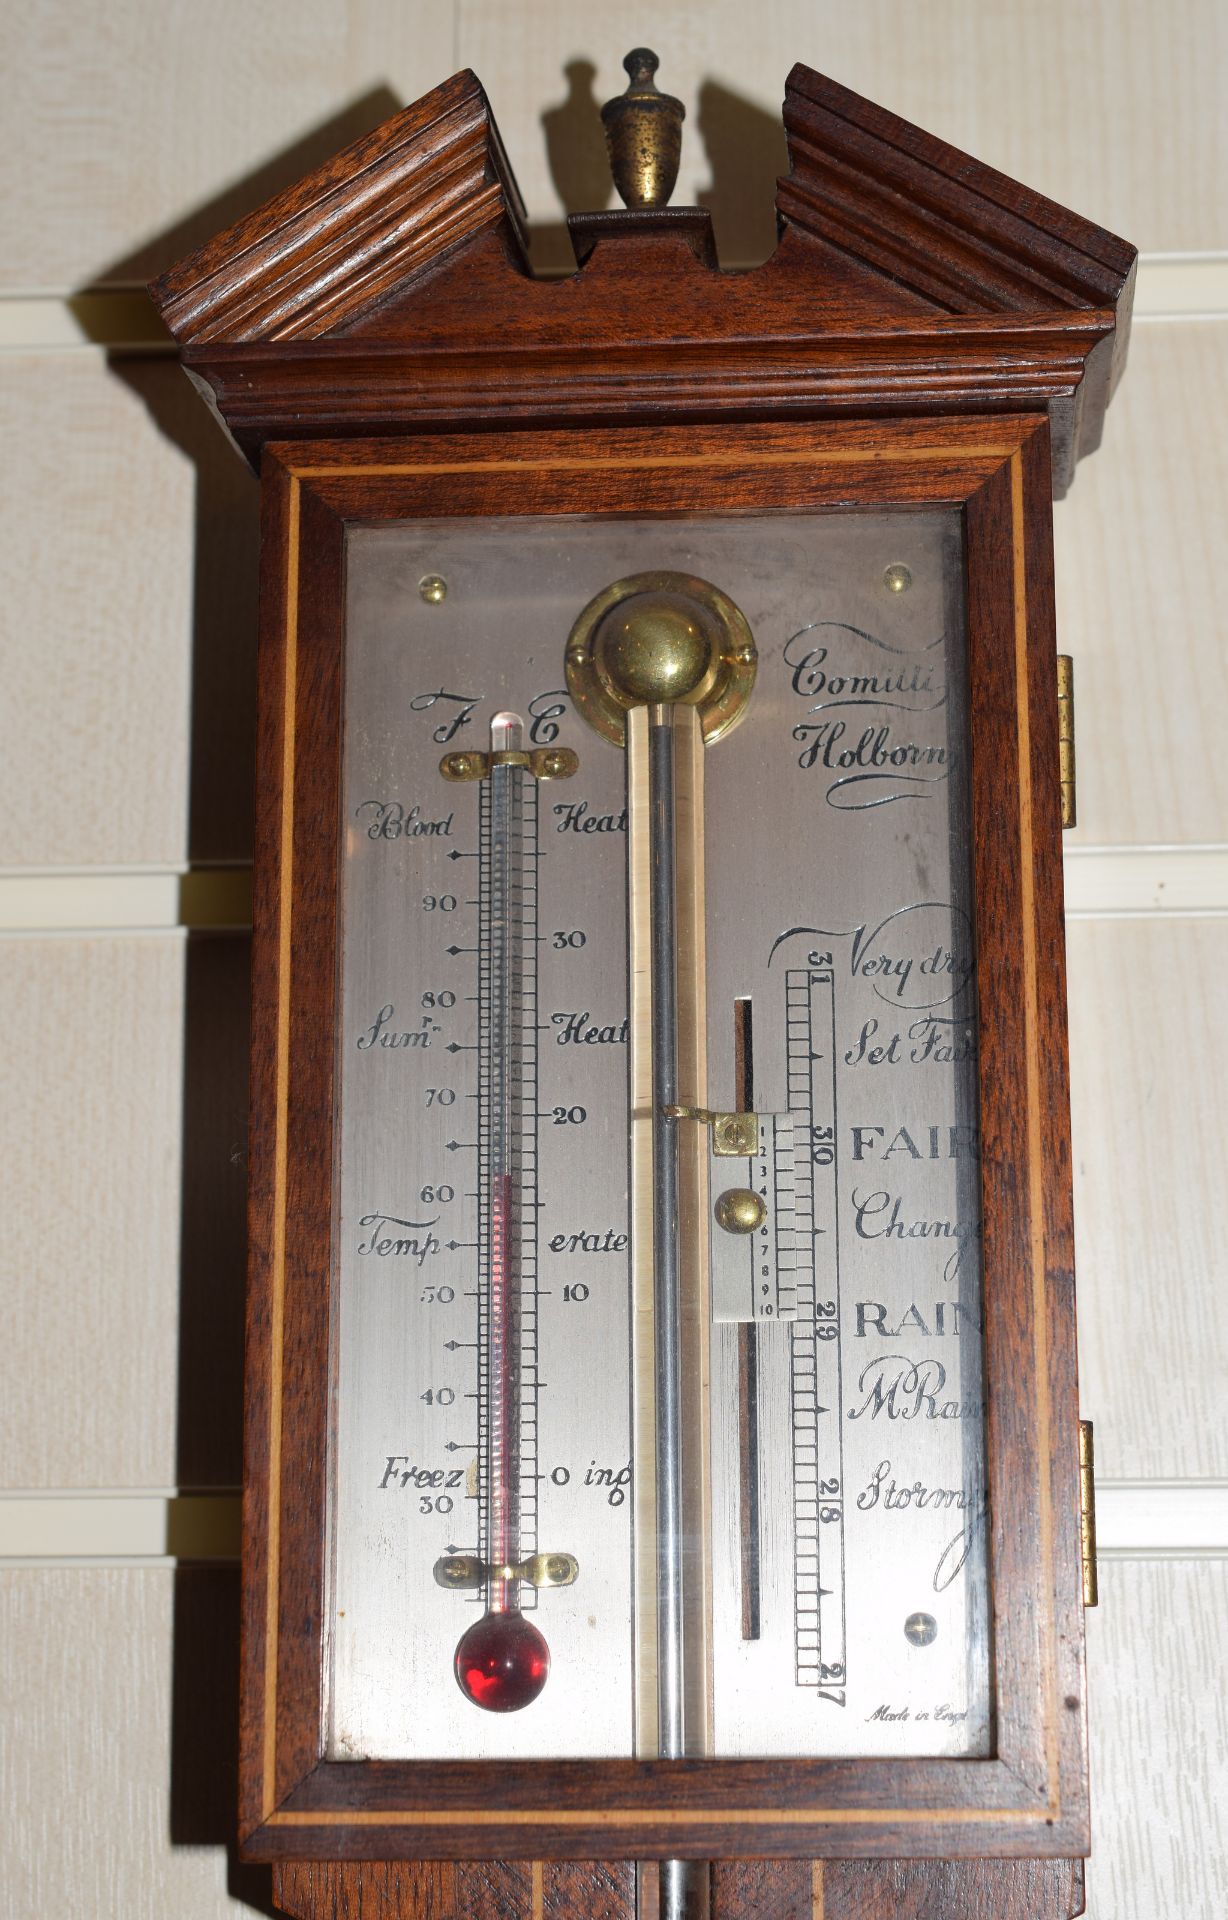 Comitti Of London Mahogany Stick Barometer *** reserve lowered *** - Image 7 of 10